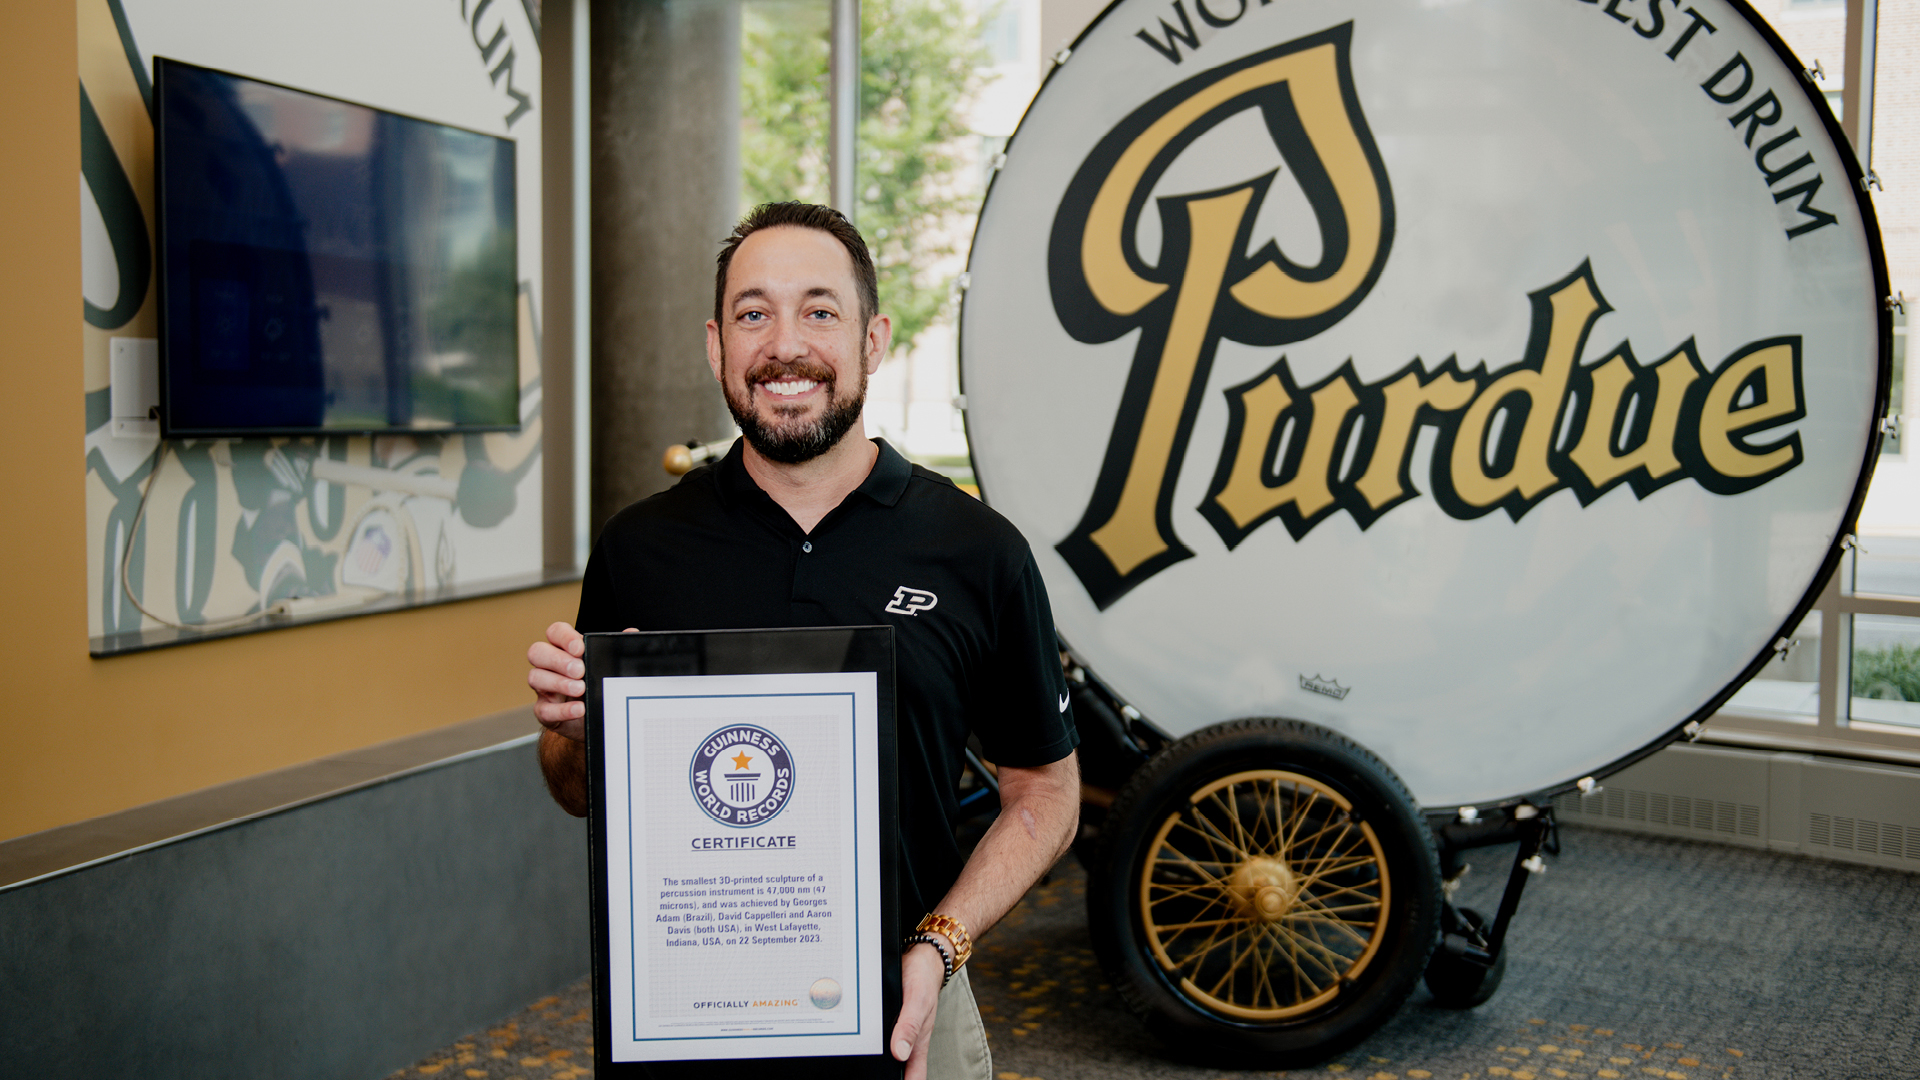 Dave Cappelleri holding the Guinness World Records certificate.